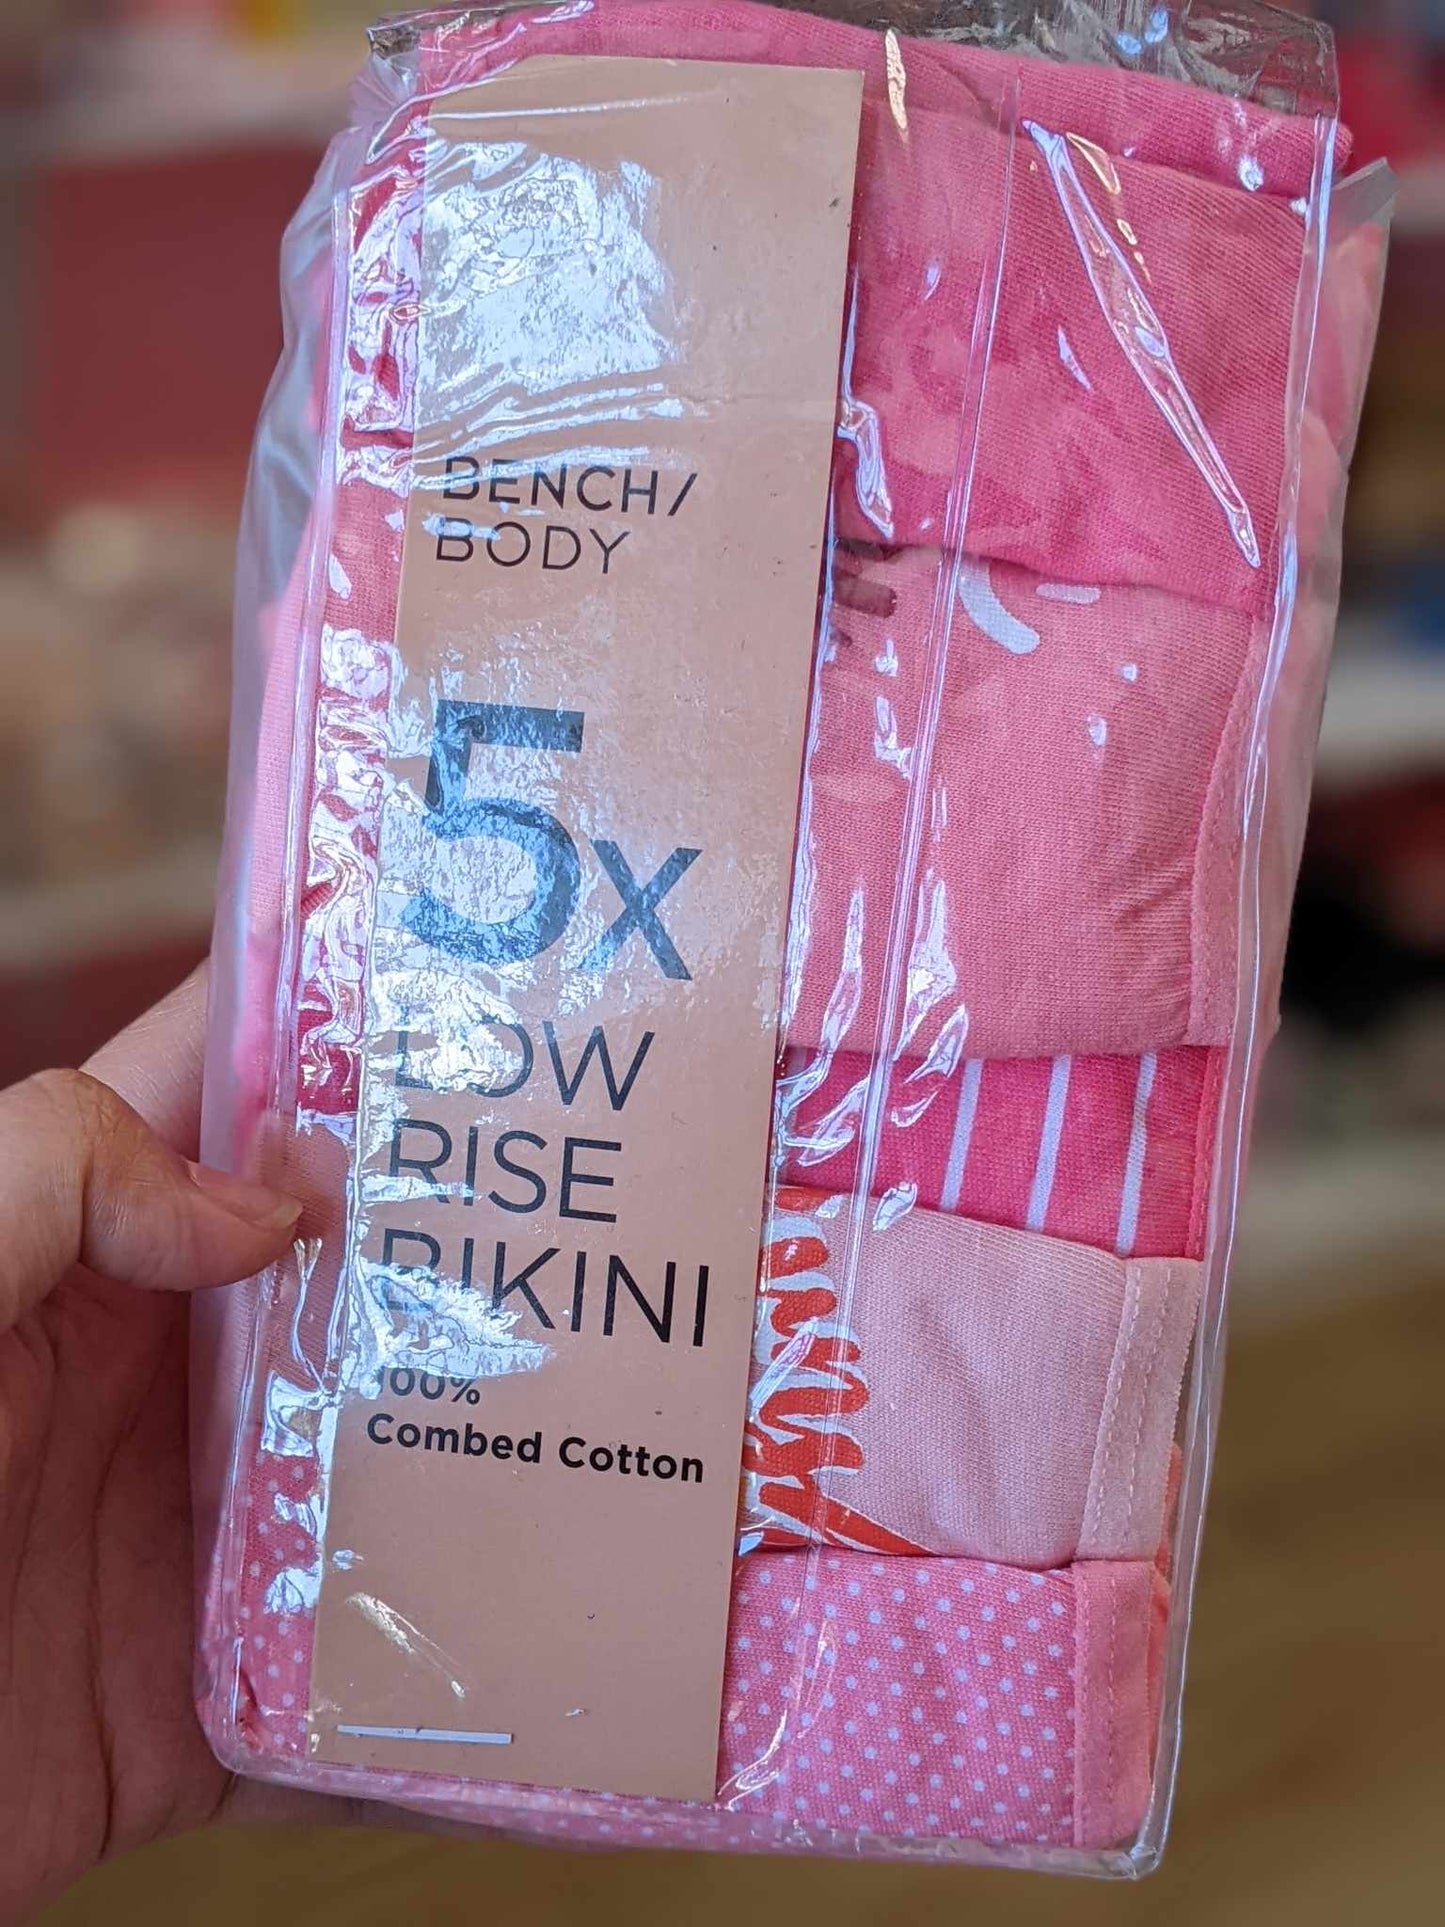 Bench 5x Low Rise Bikini